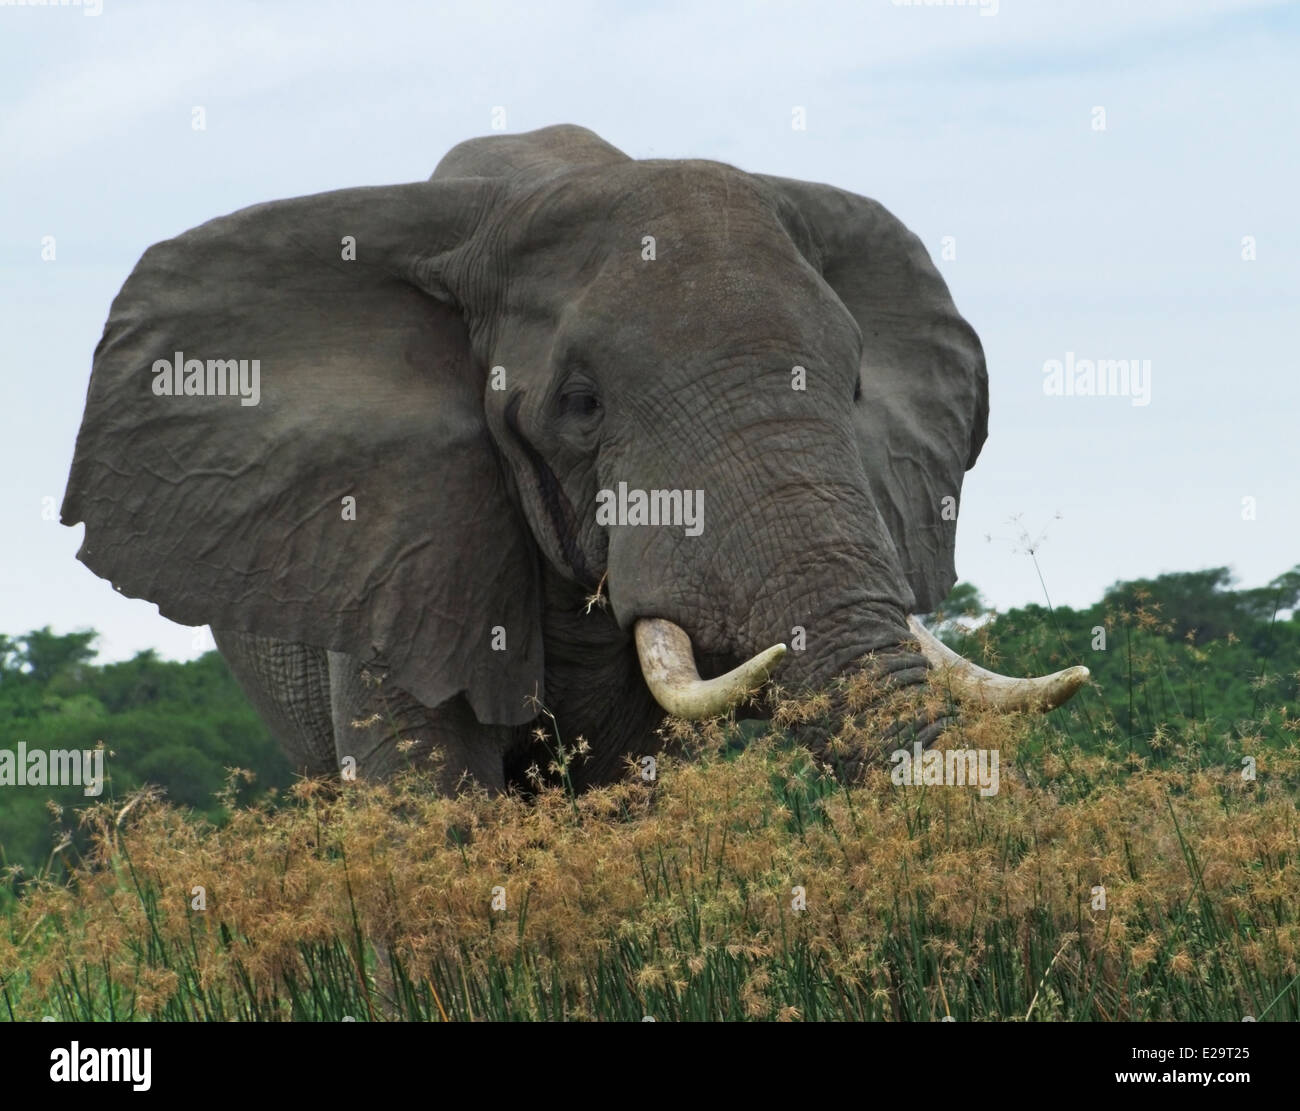 a elephant behind high grassy vegetation in Uganda (Africa) Stock Photo